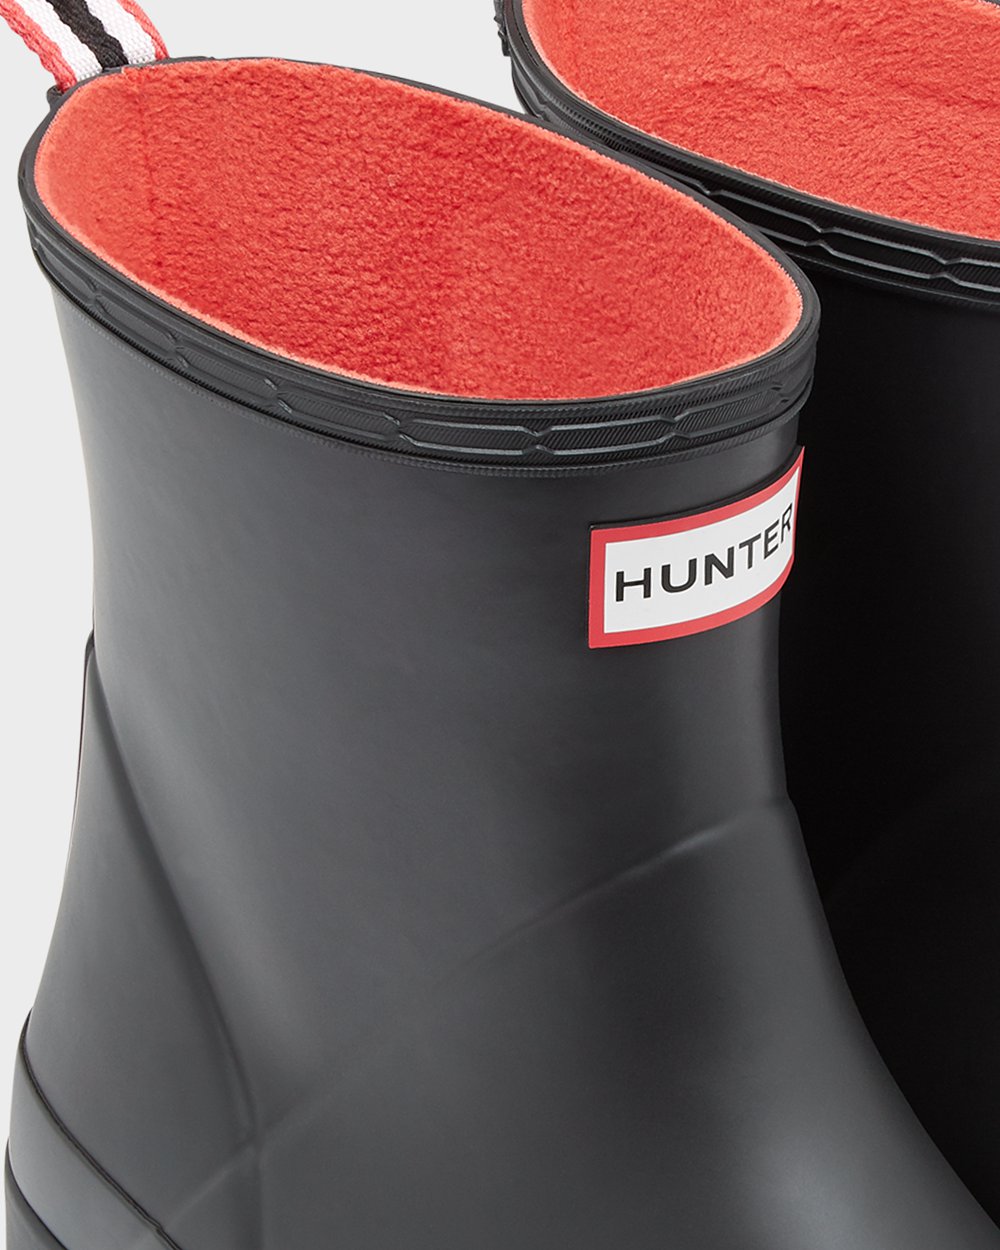 Mens Play Boots - Hunter Original Insulated Short Rain (59KRBWIDM) - Black